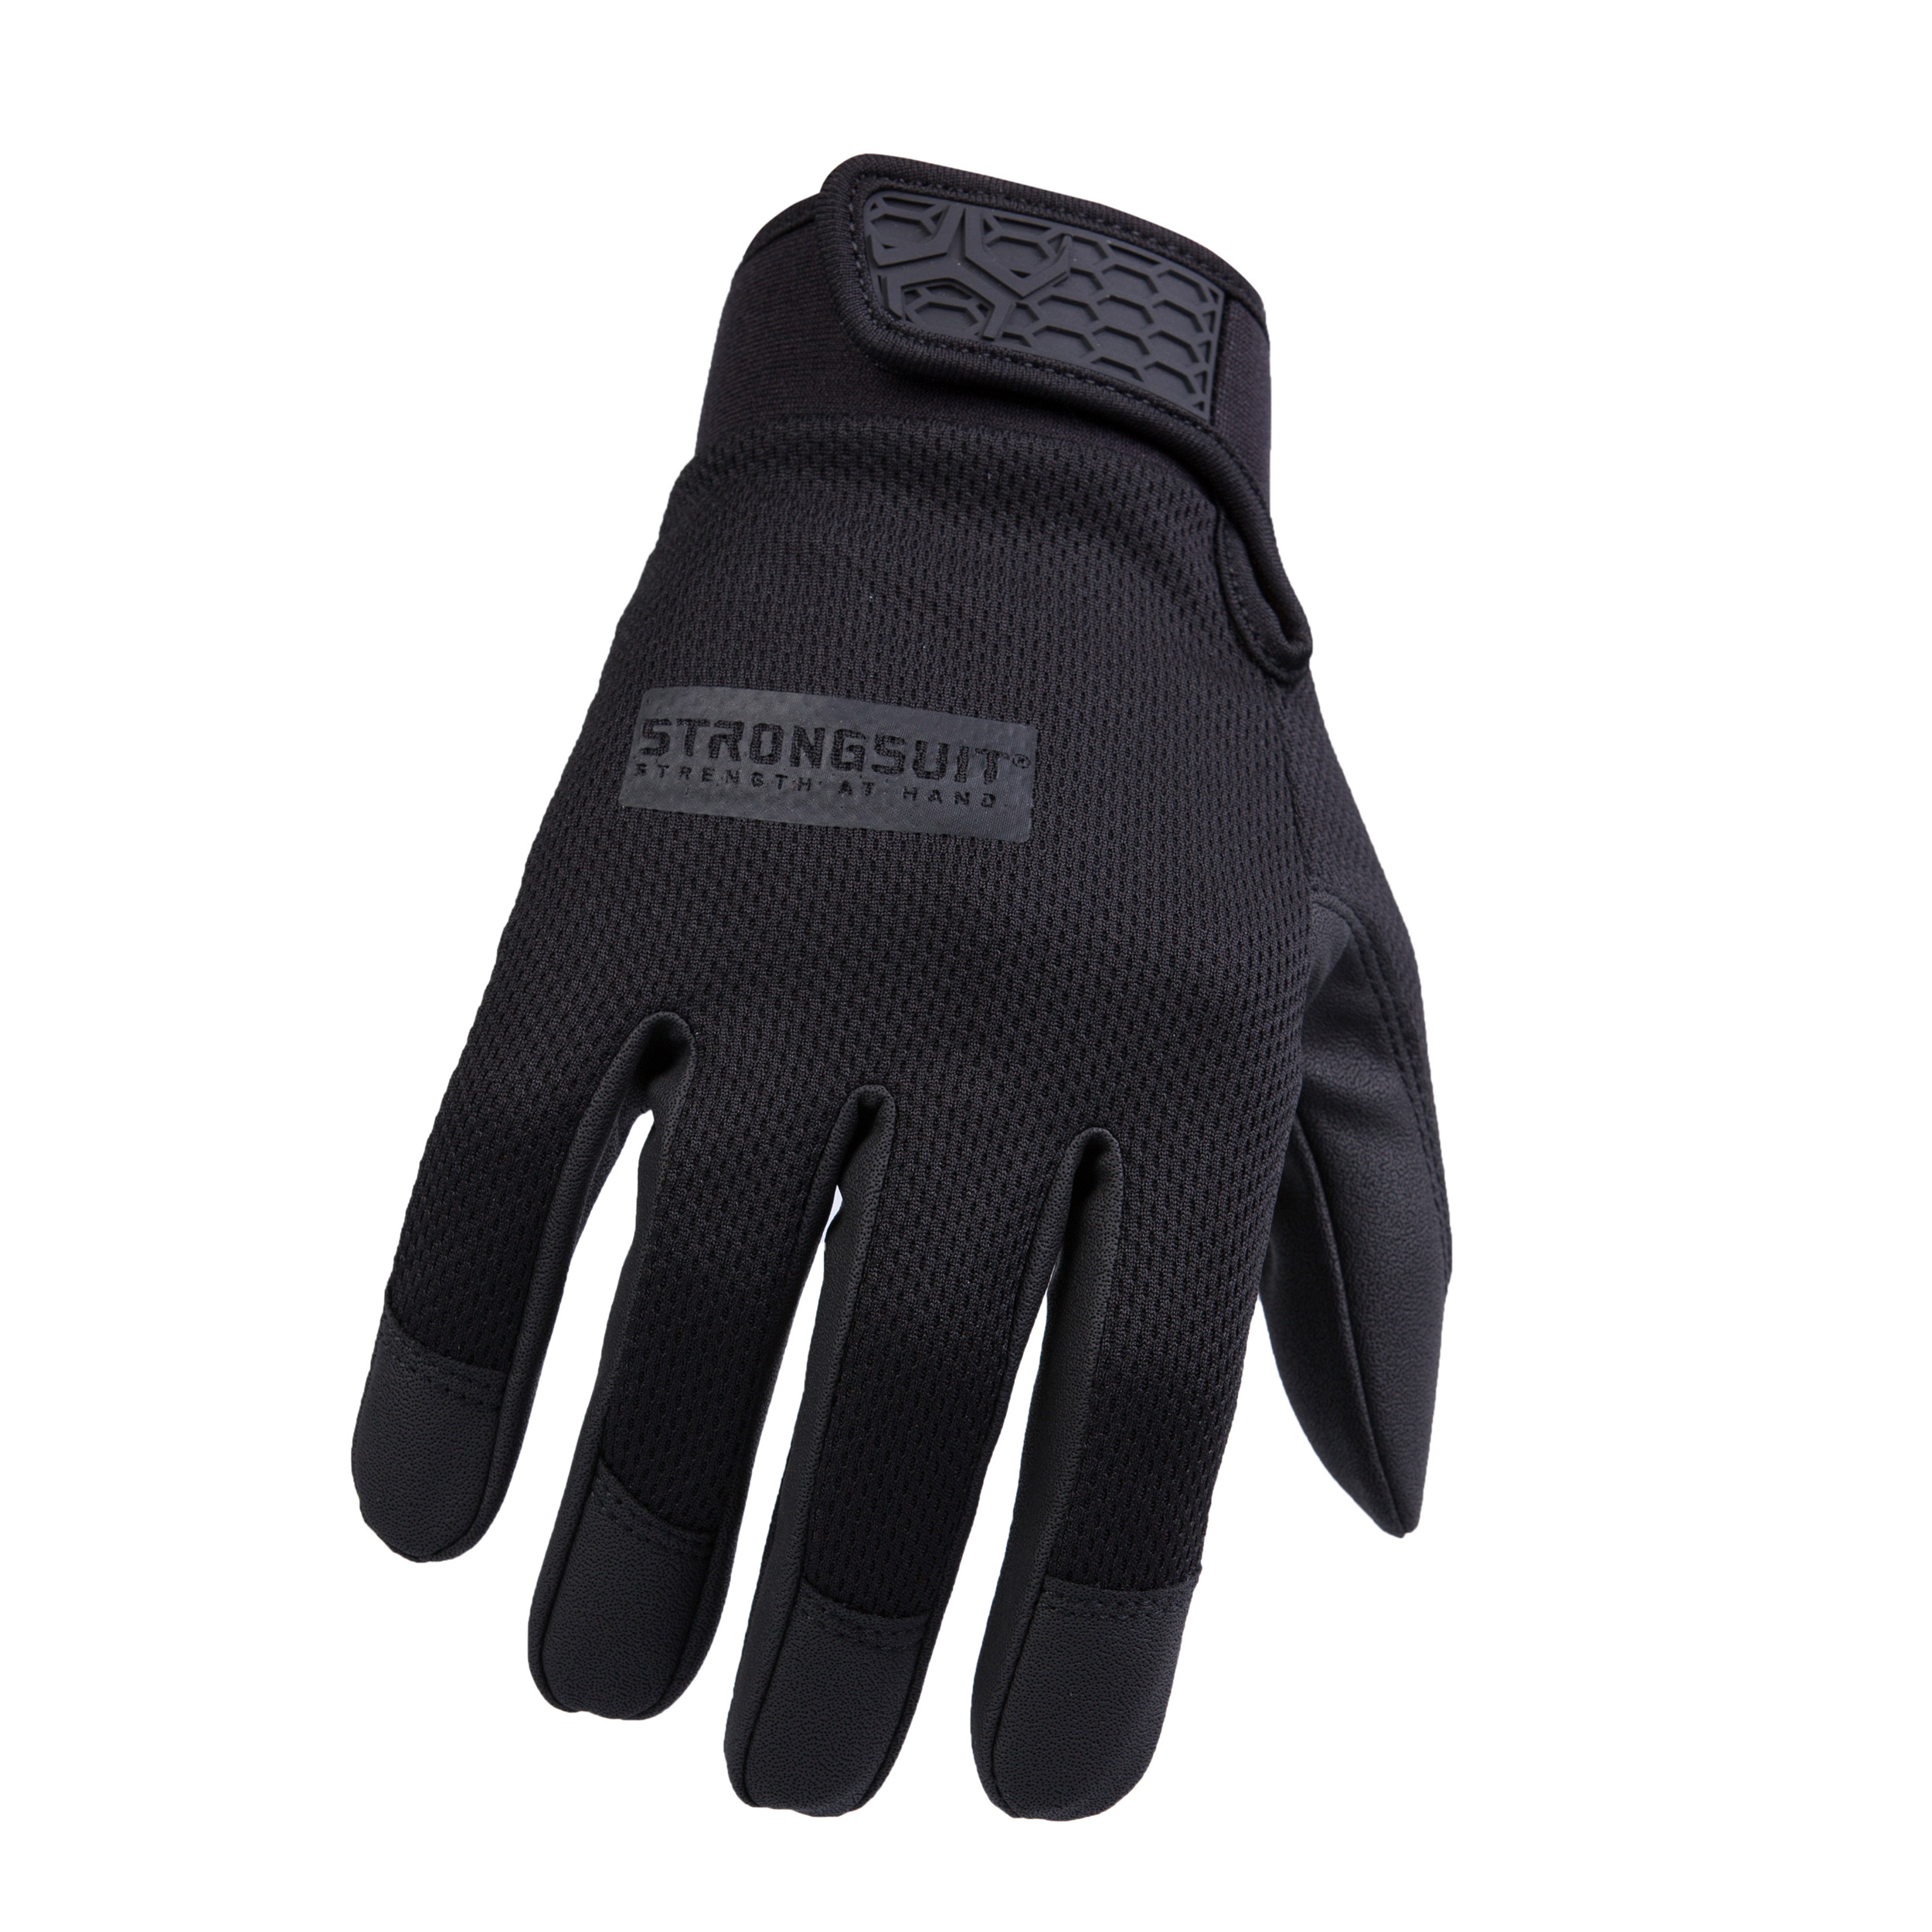 Second Skin Gloves Black Gloves Extra Large